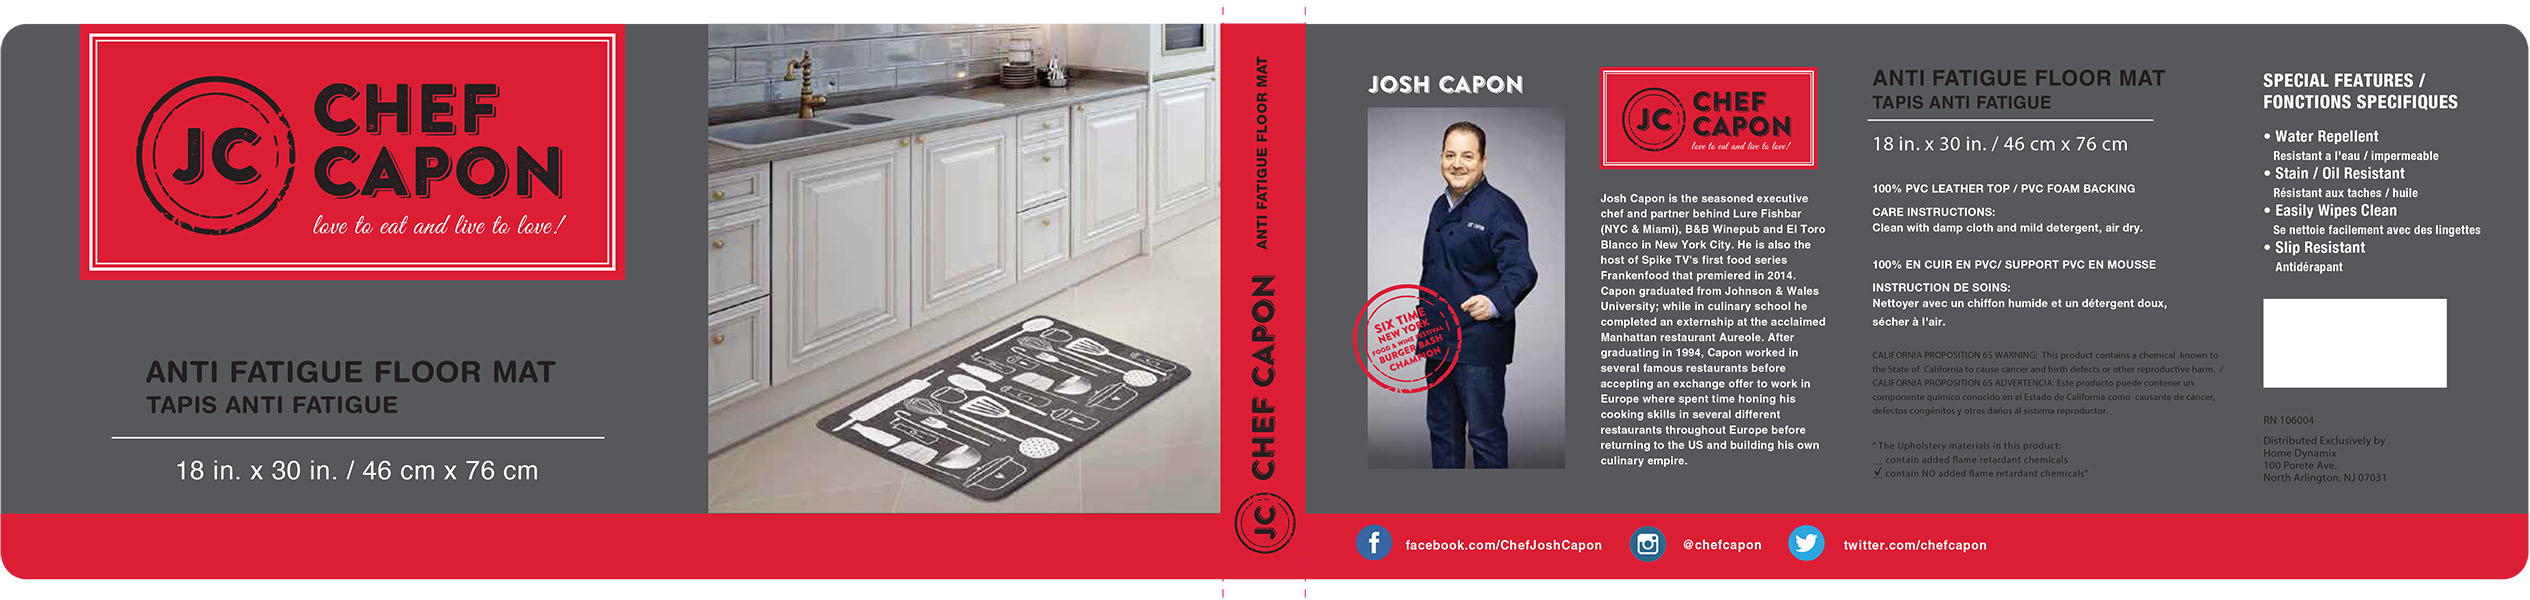 Josh Capon Kitchen Mat Label